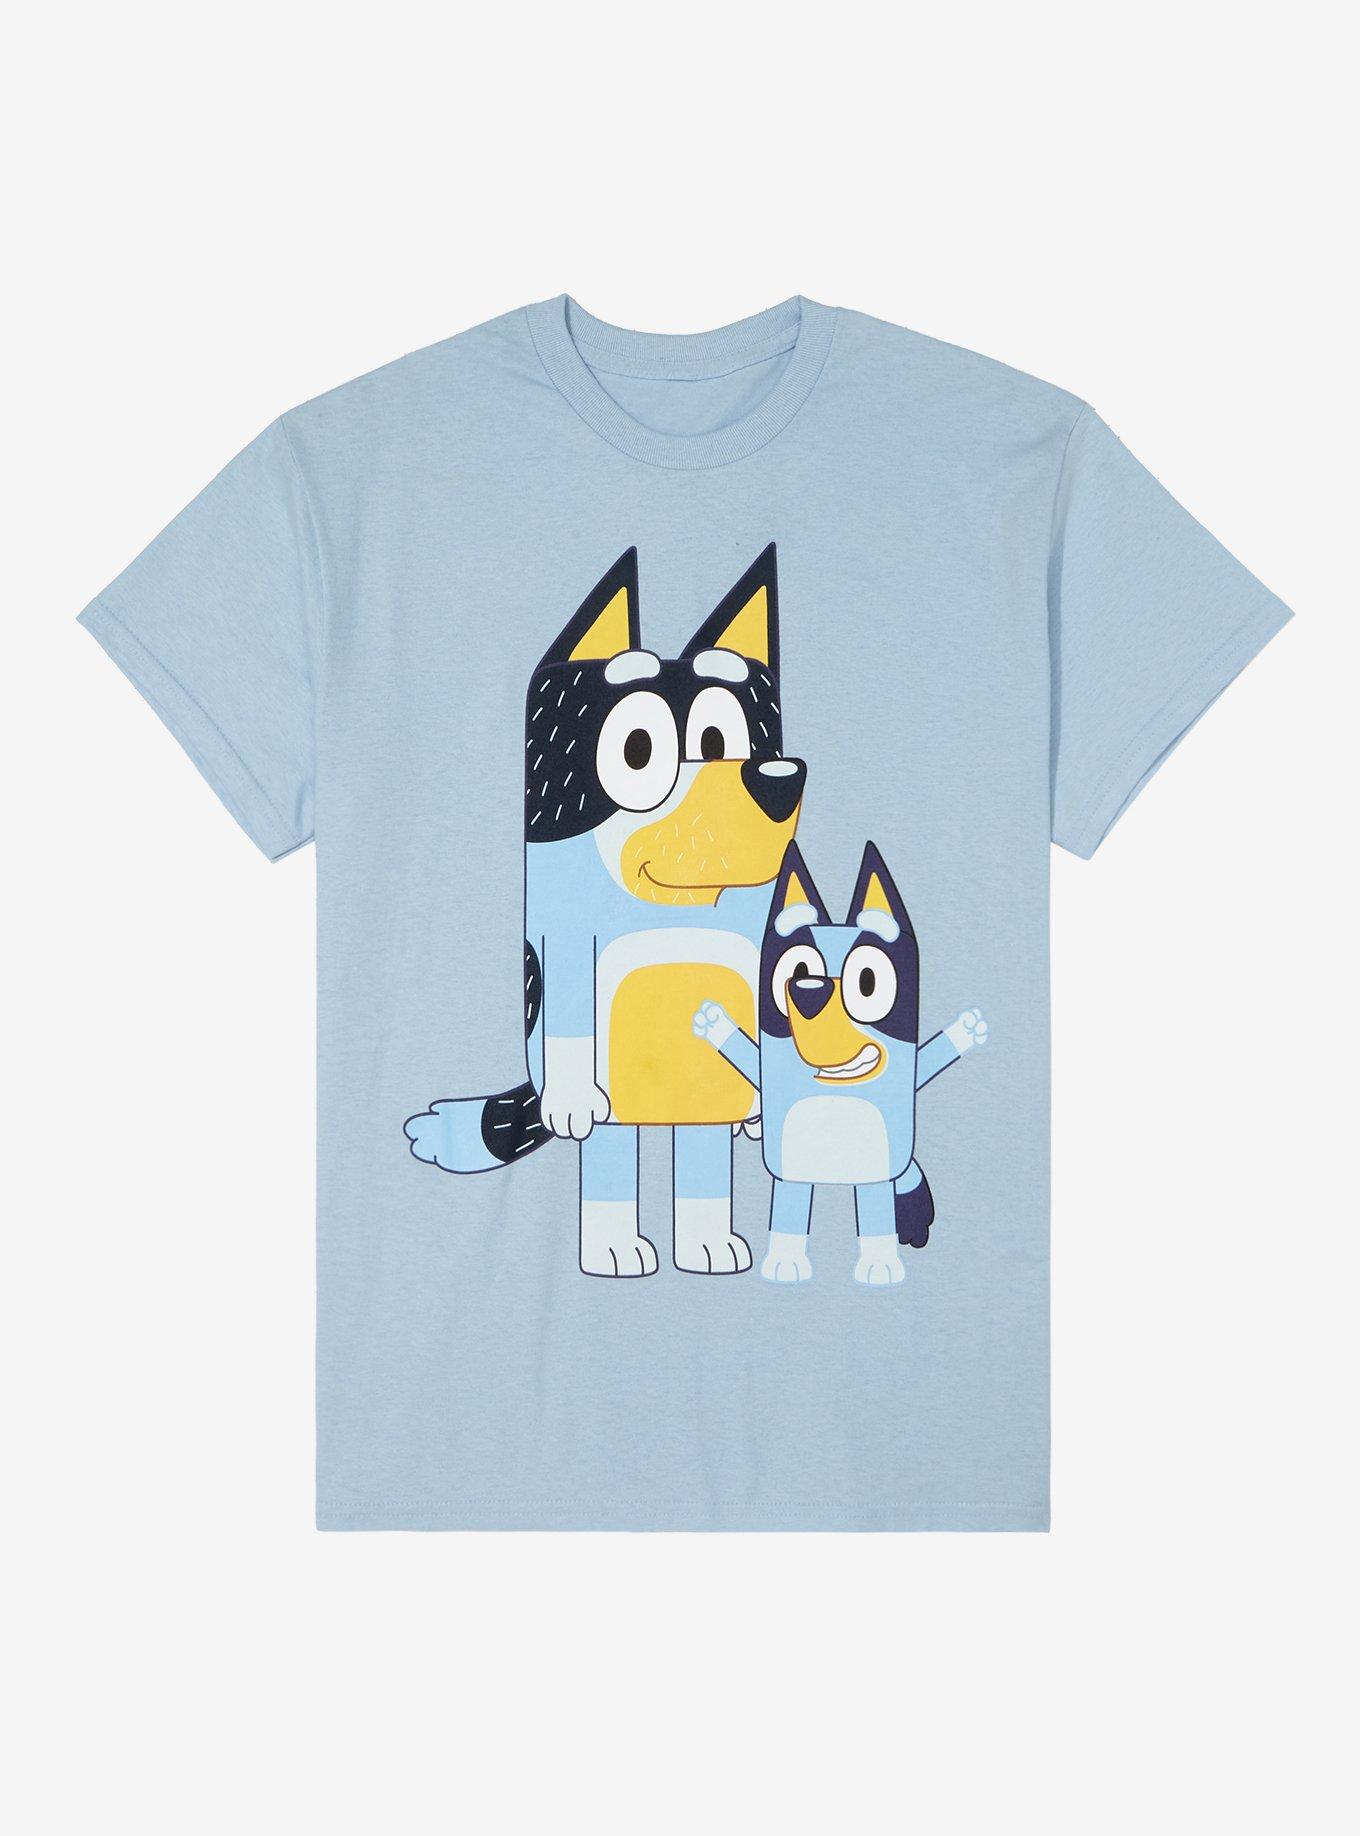 Bluey Bandit & Bluey Boyfriend Fit Girls T-Shirt